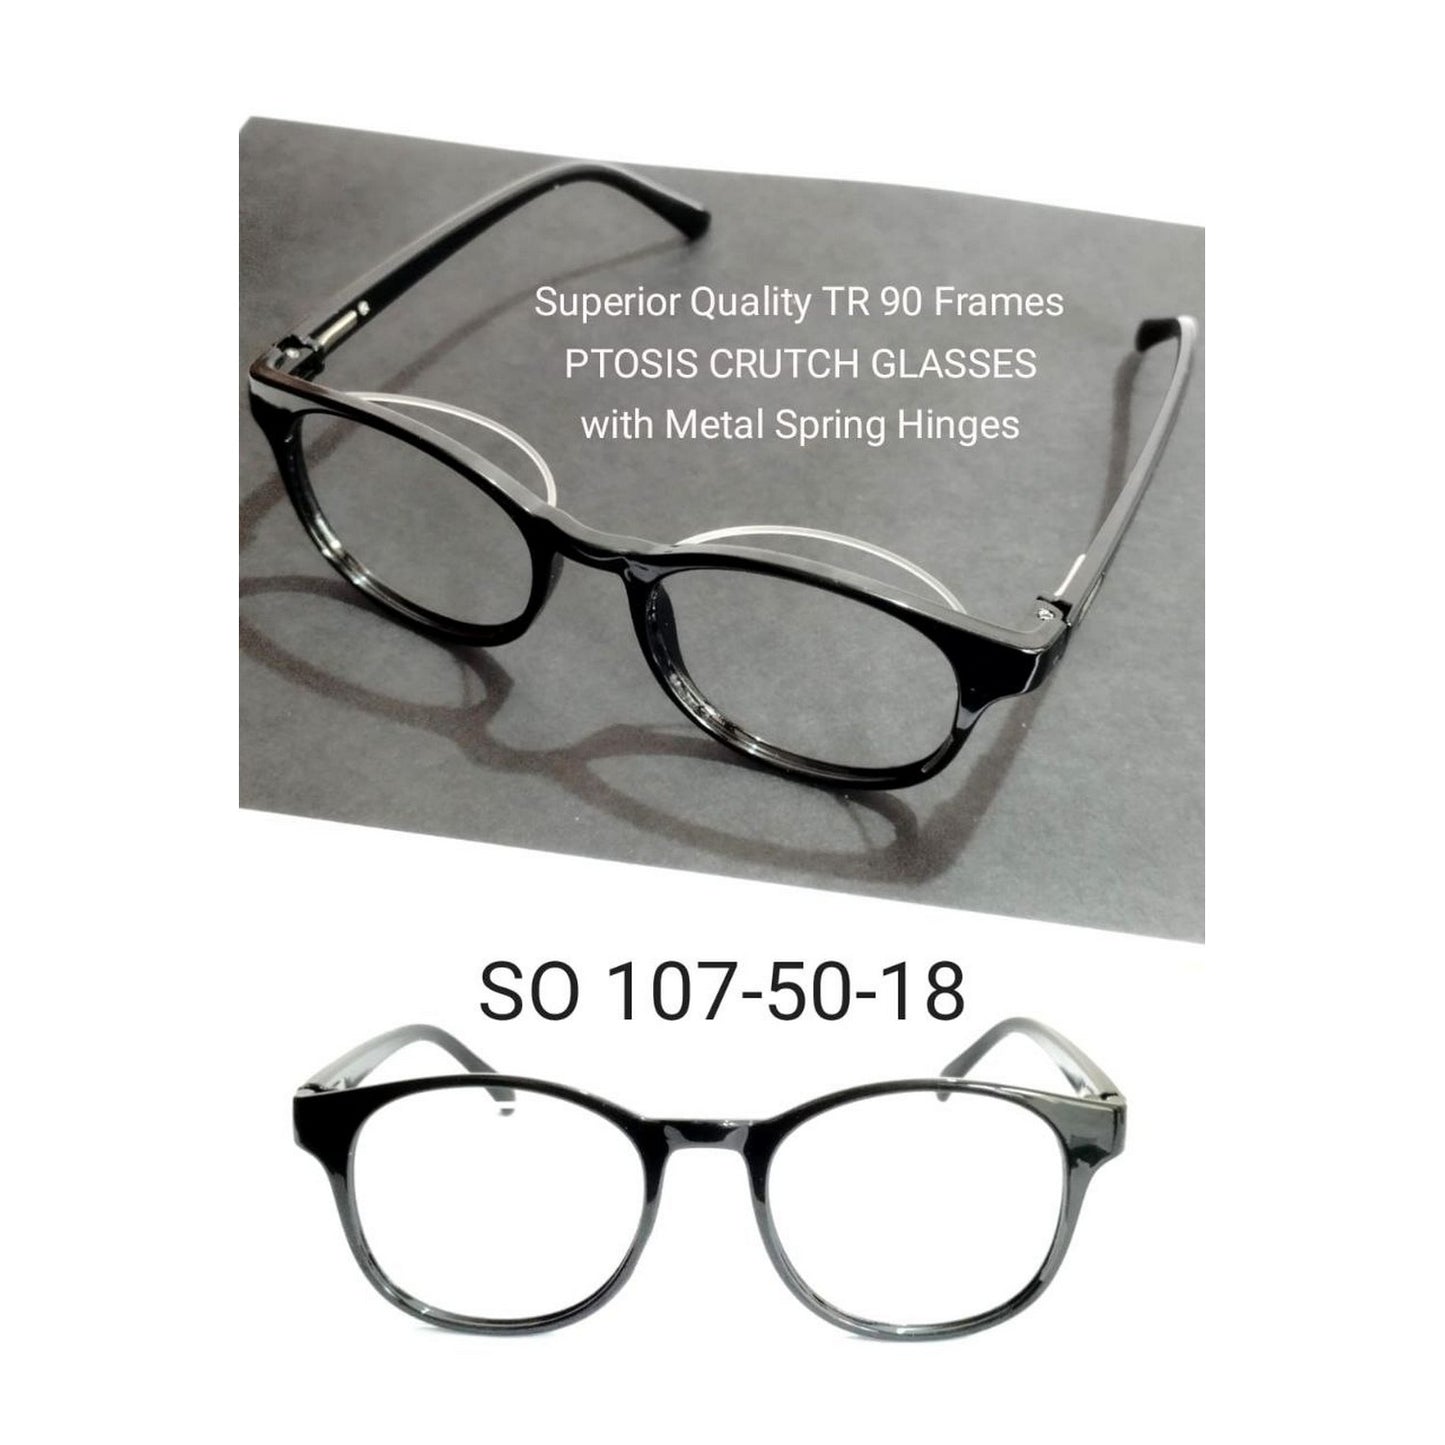 ElevateVision Full Frame Ptosis Crutch Glasses